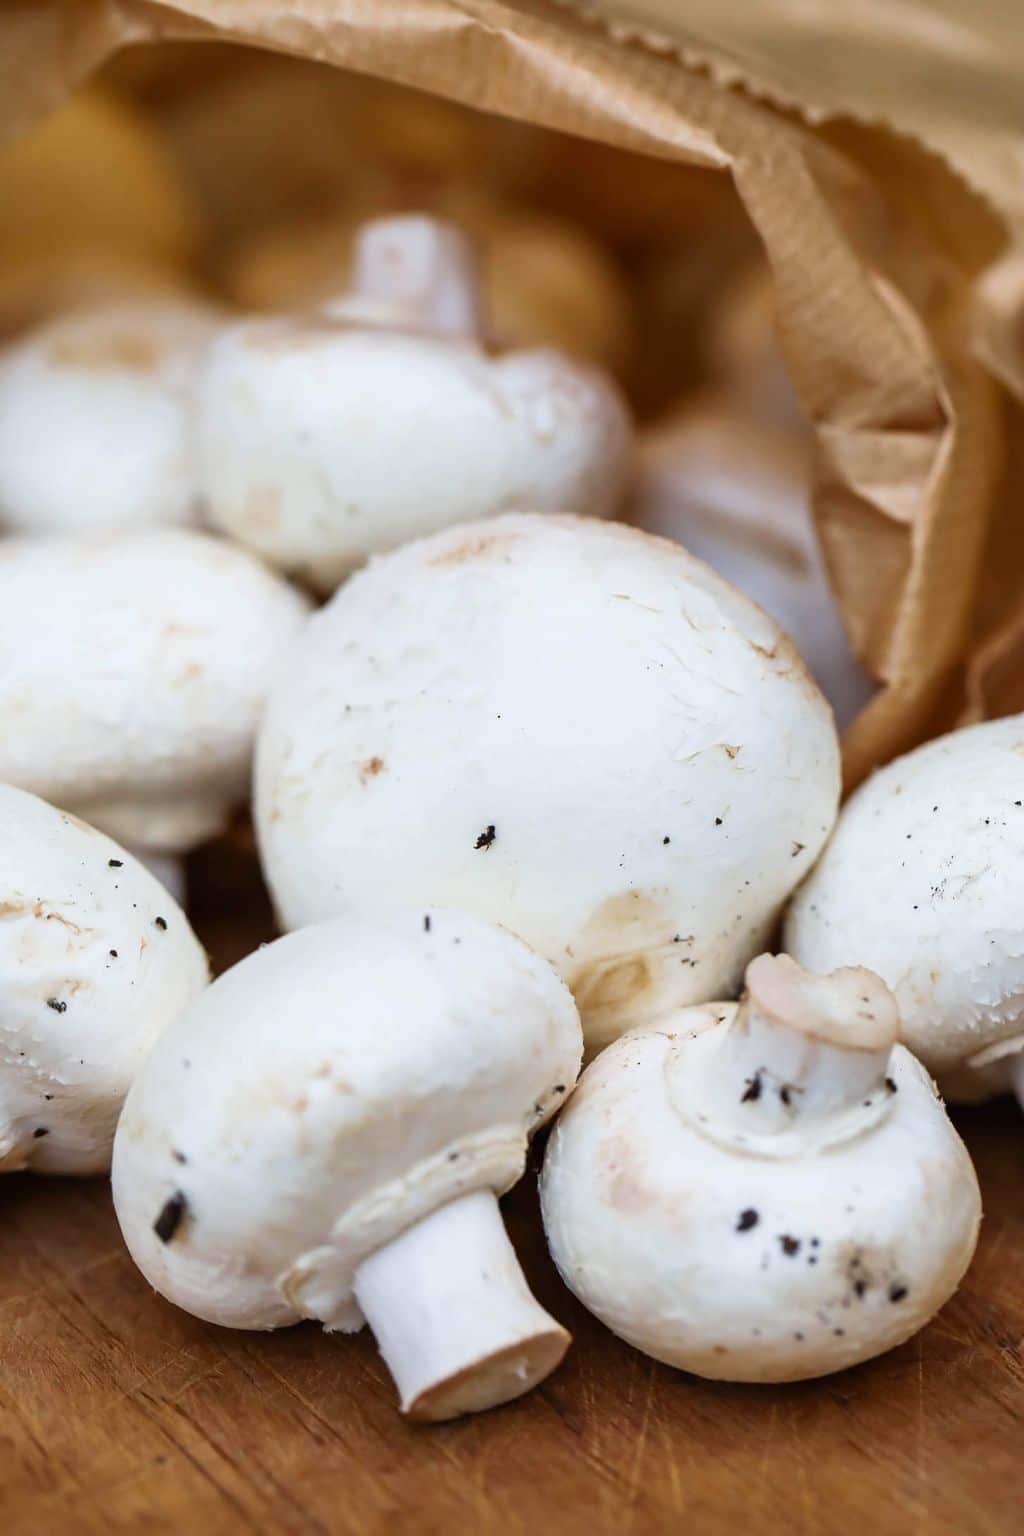 SautÃ©ed mushrooms and onions